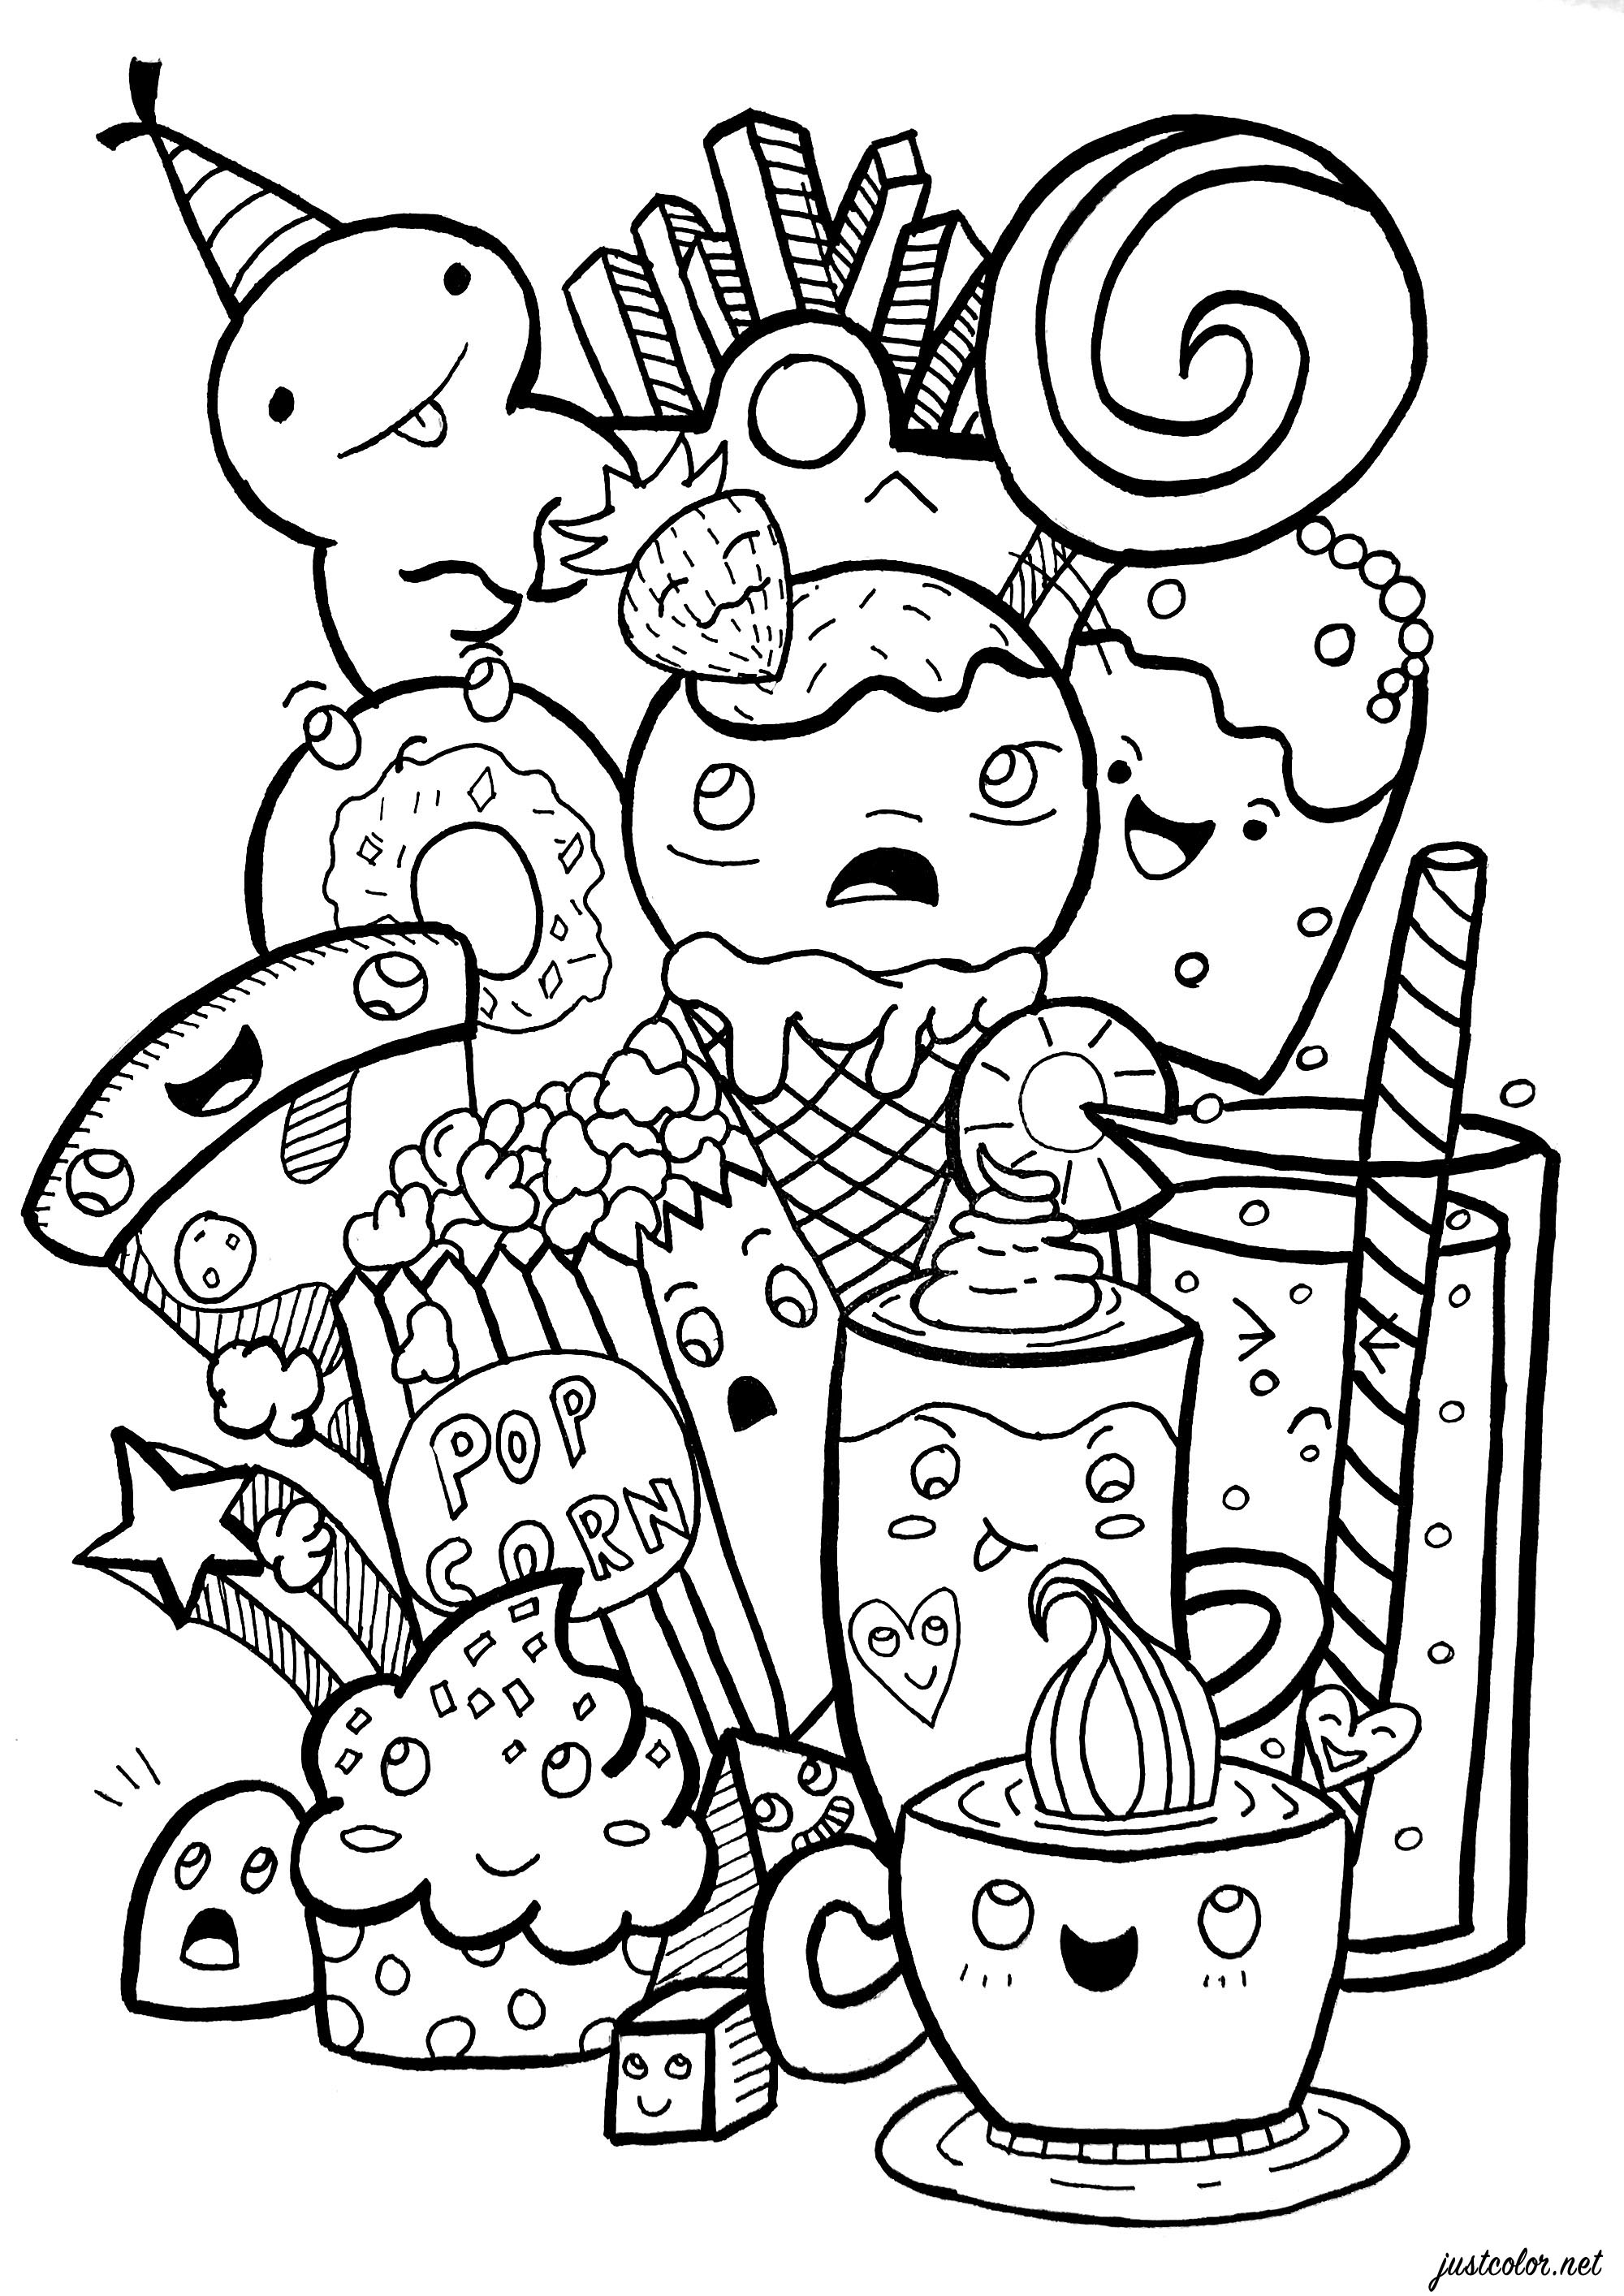 Junk food Doodle - Doodle Art / Doodling Adult Coloring Pages